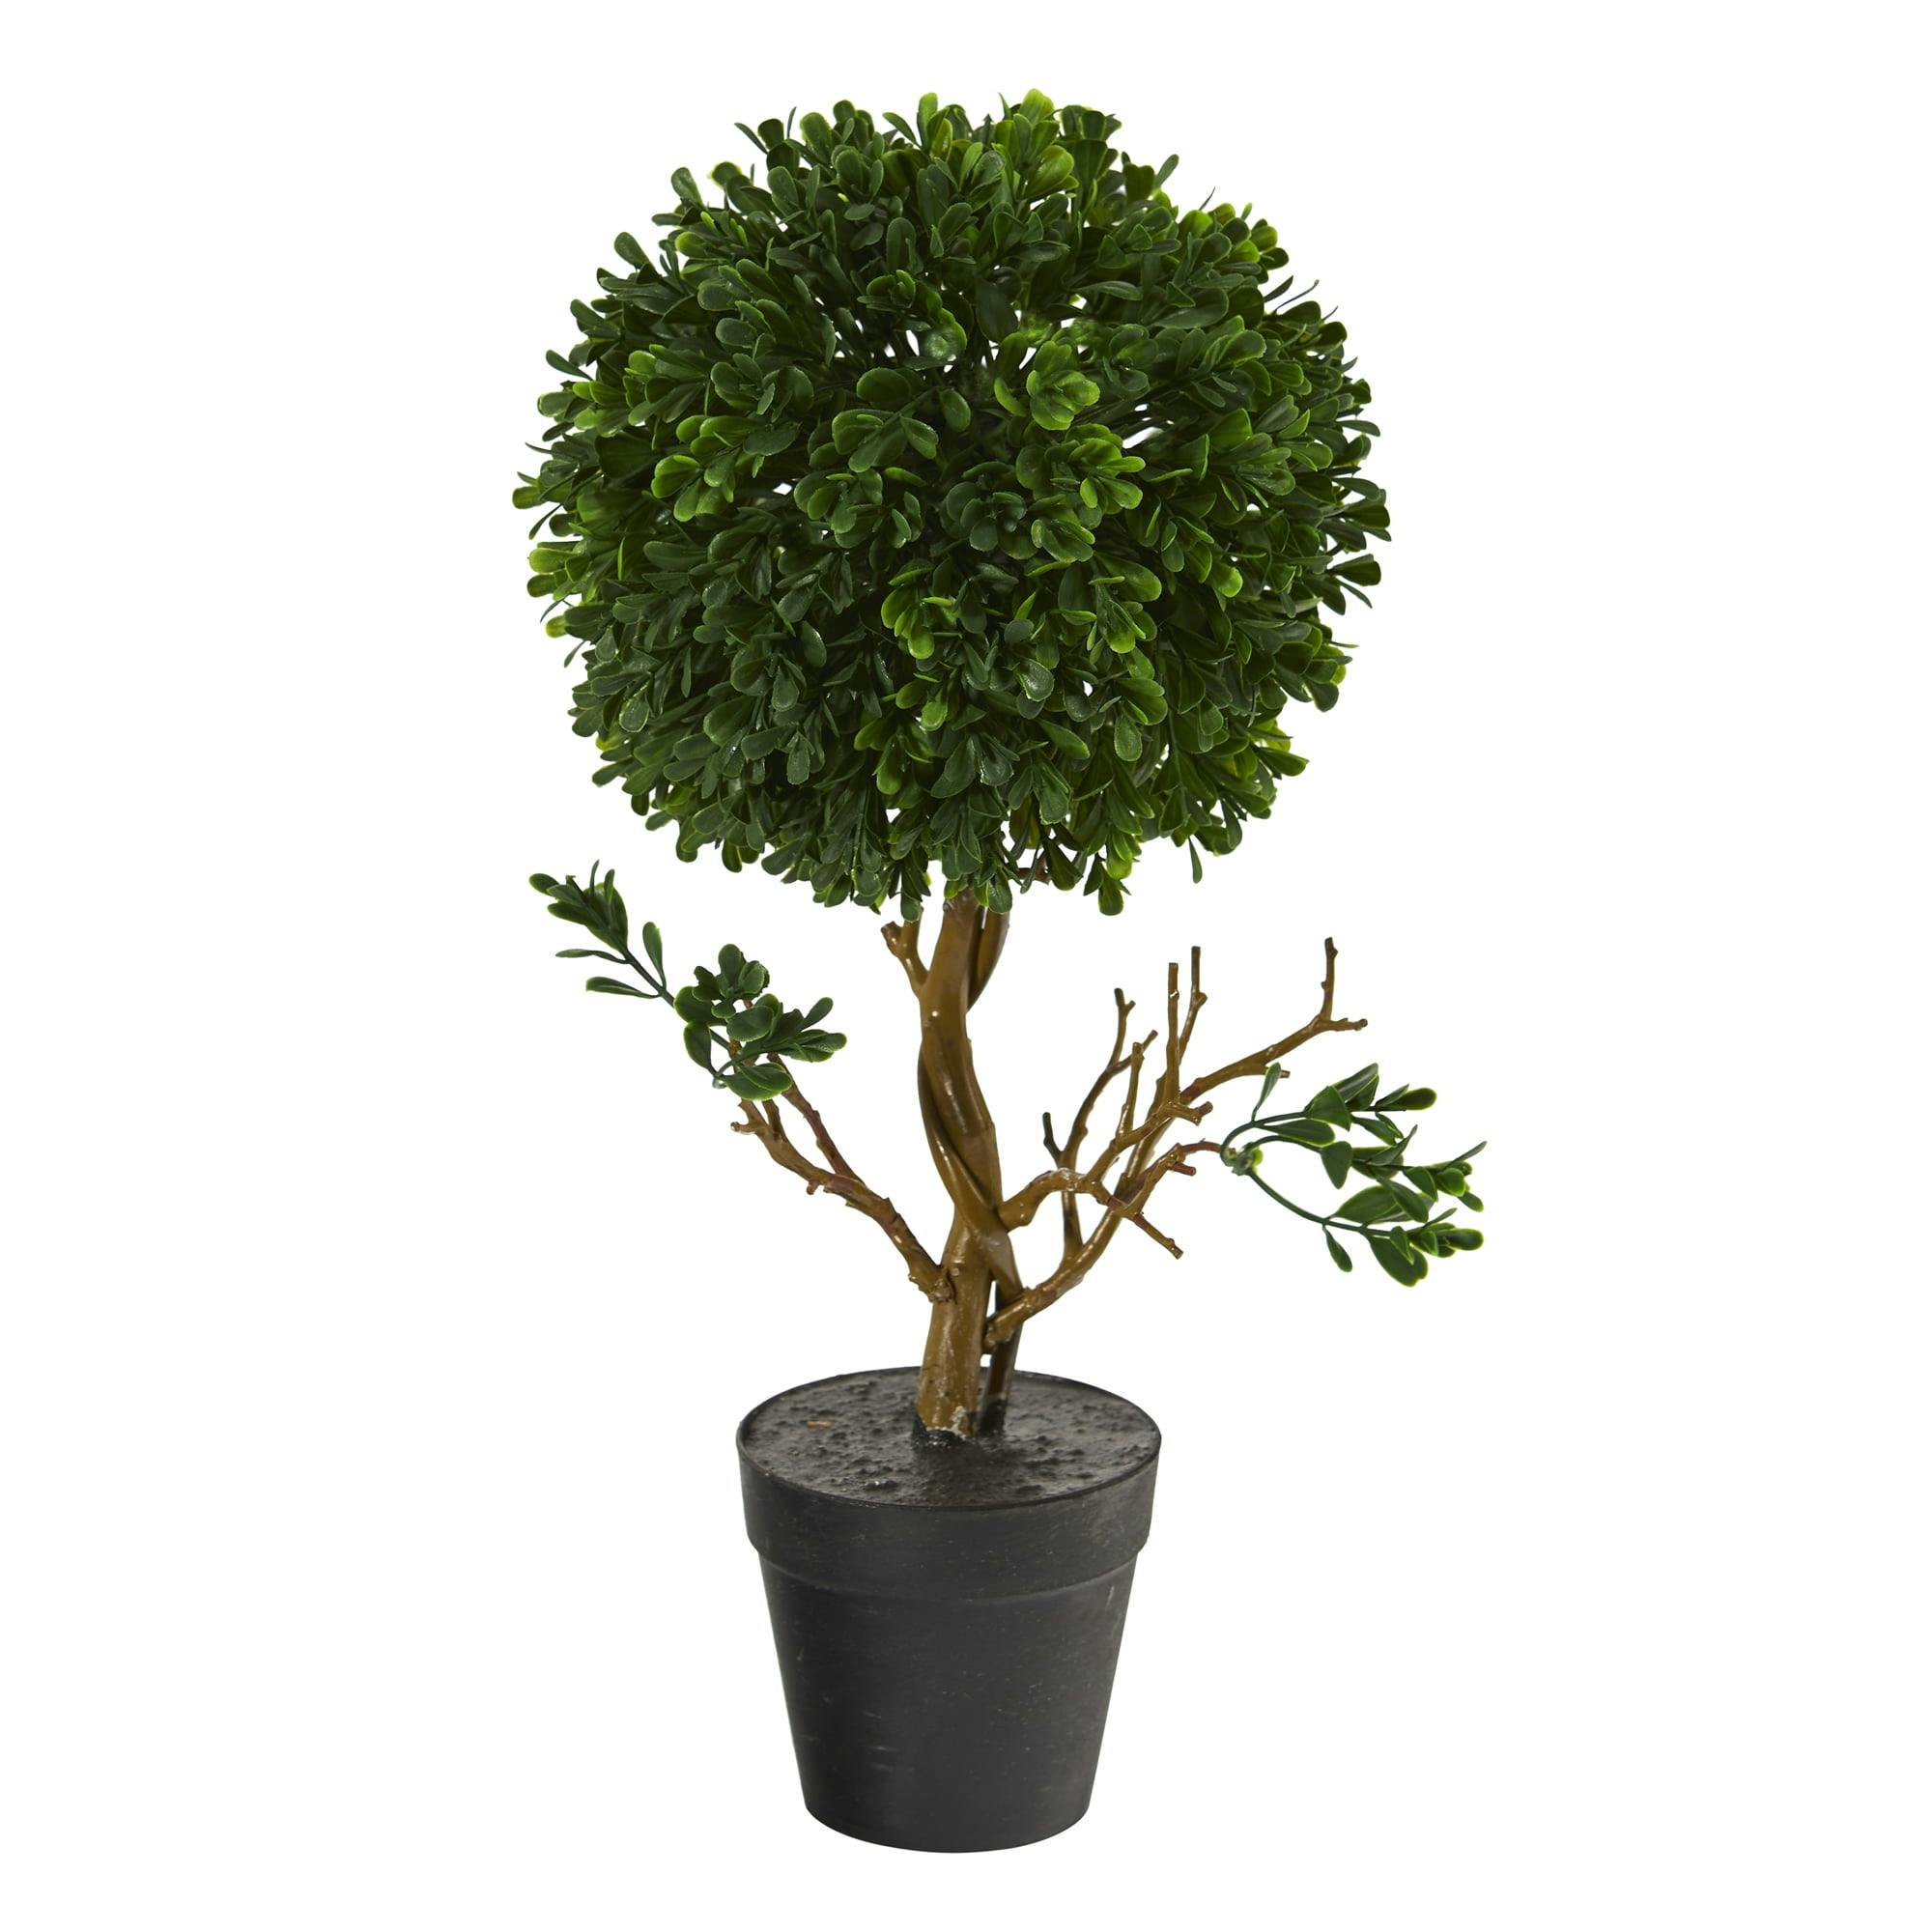 Elegant 17" UV-Resistant Boxwood Topiary in Plastic Pot for Outdoor Decor